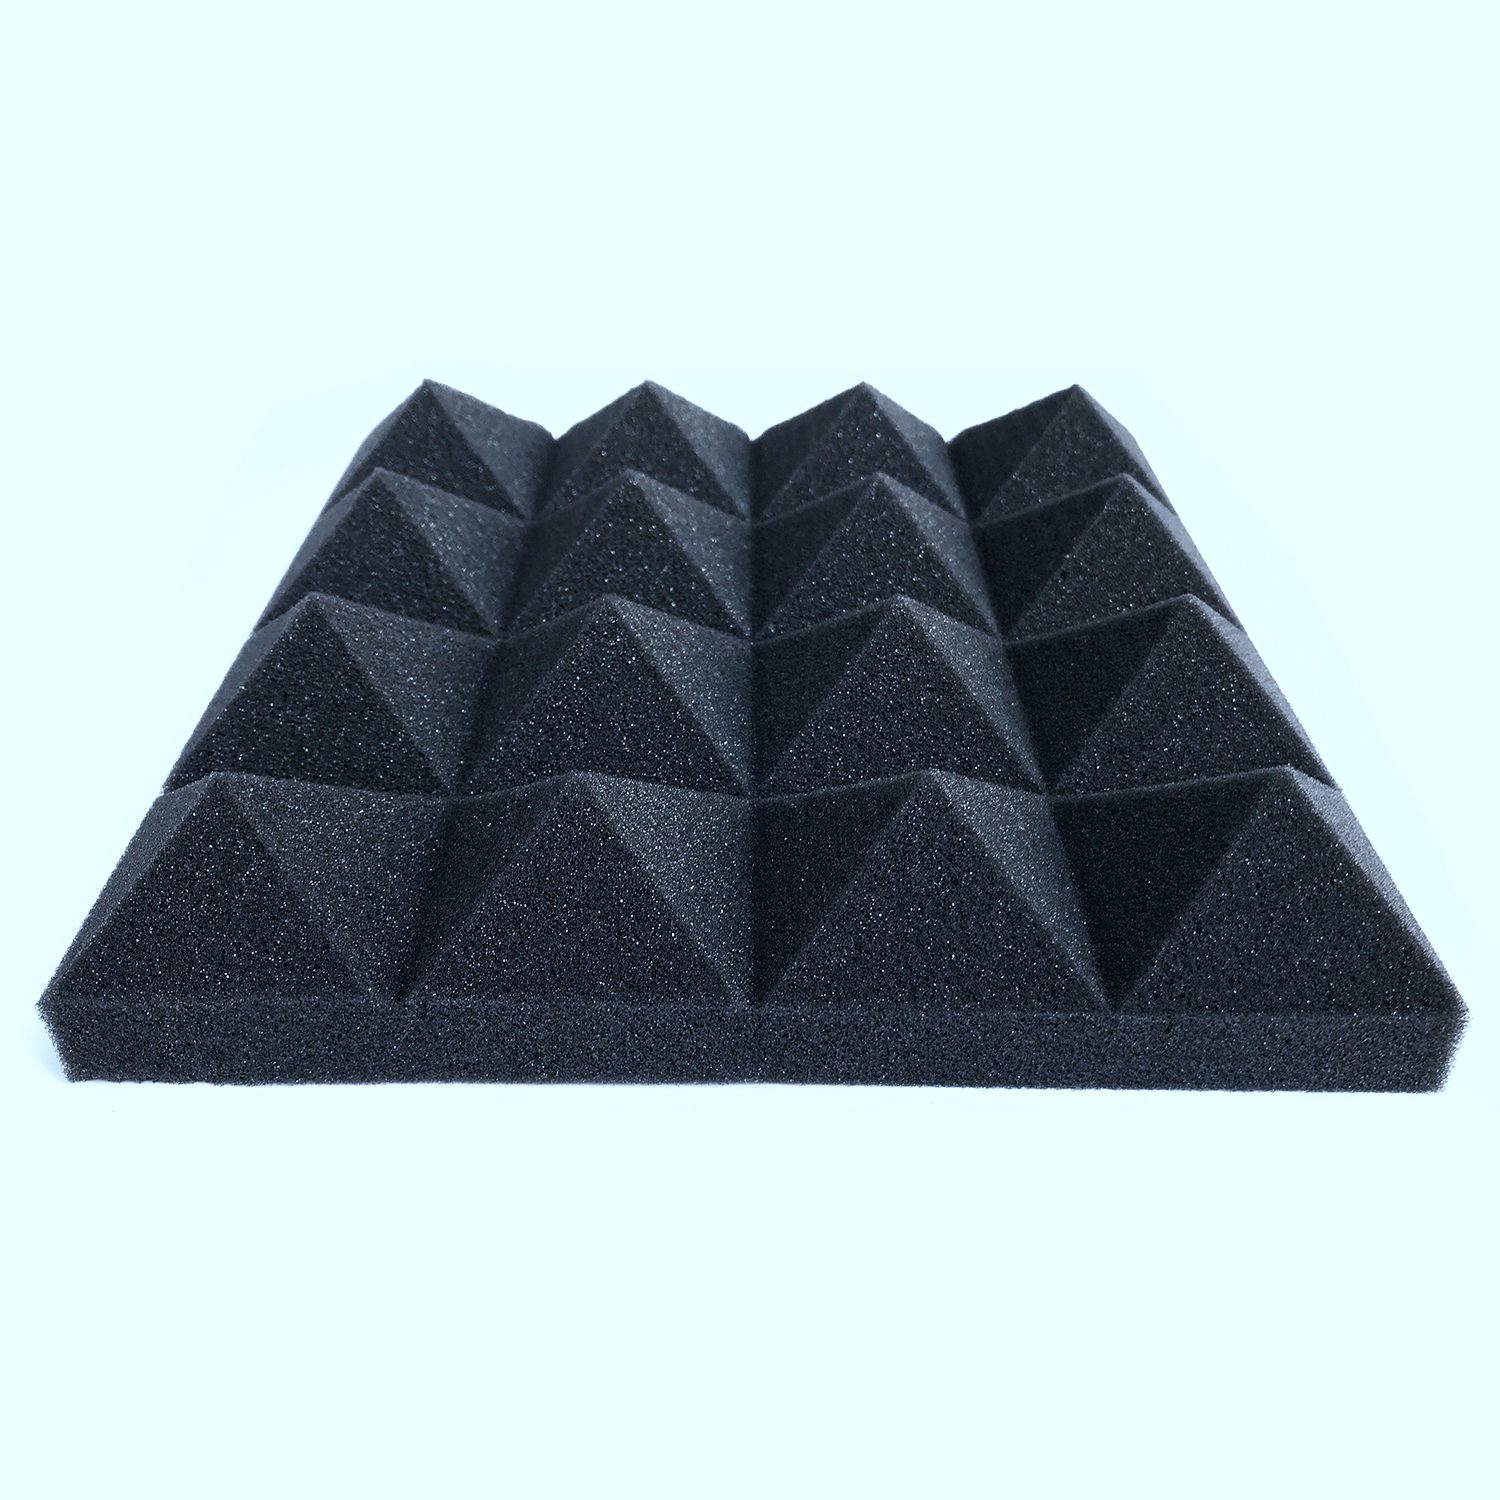 Drop shipping 12 pcs Soundproofing Foam Sound Absorption Pyramid Studio Treatment Wall Panels 25*25*5cm Acoustic foam